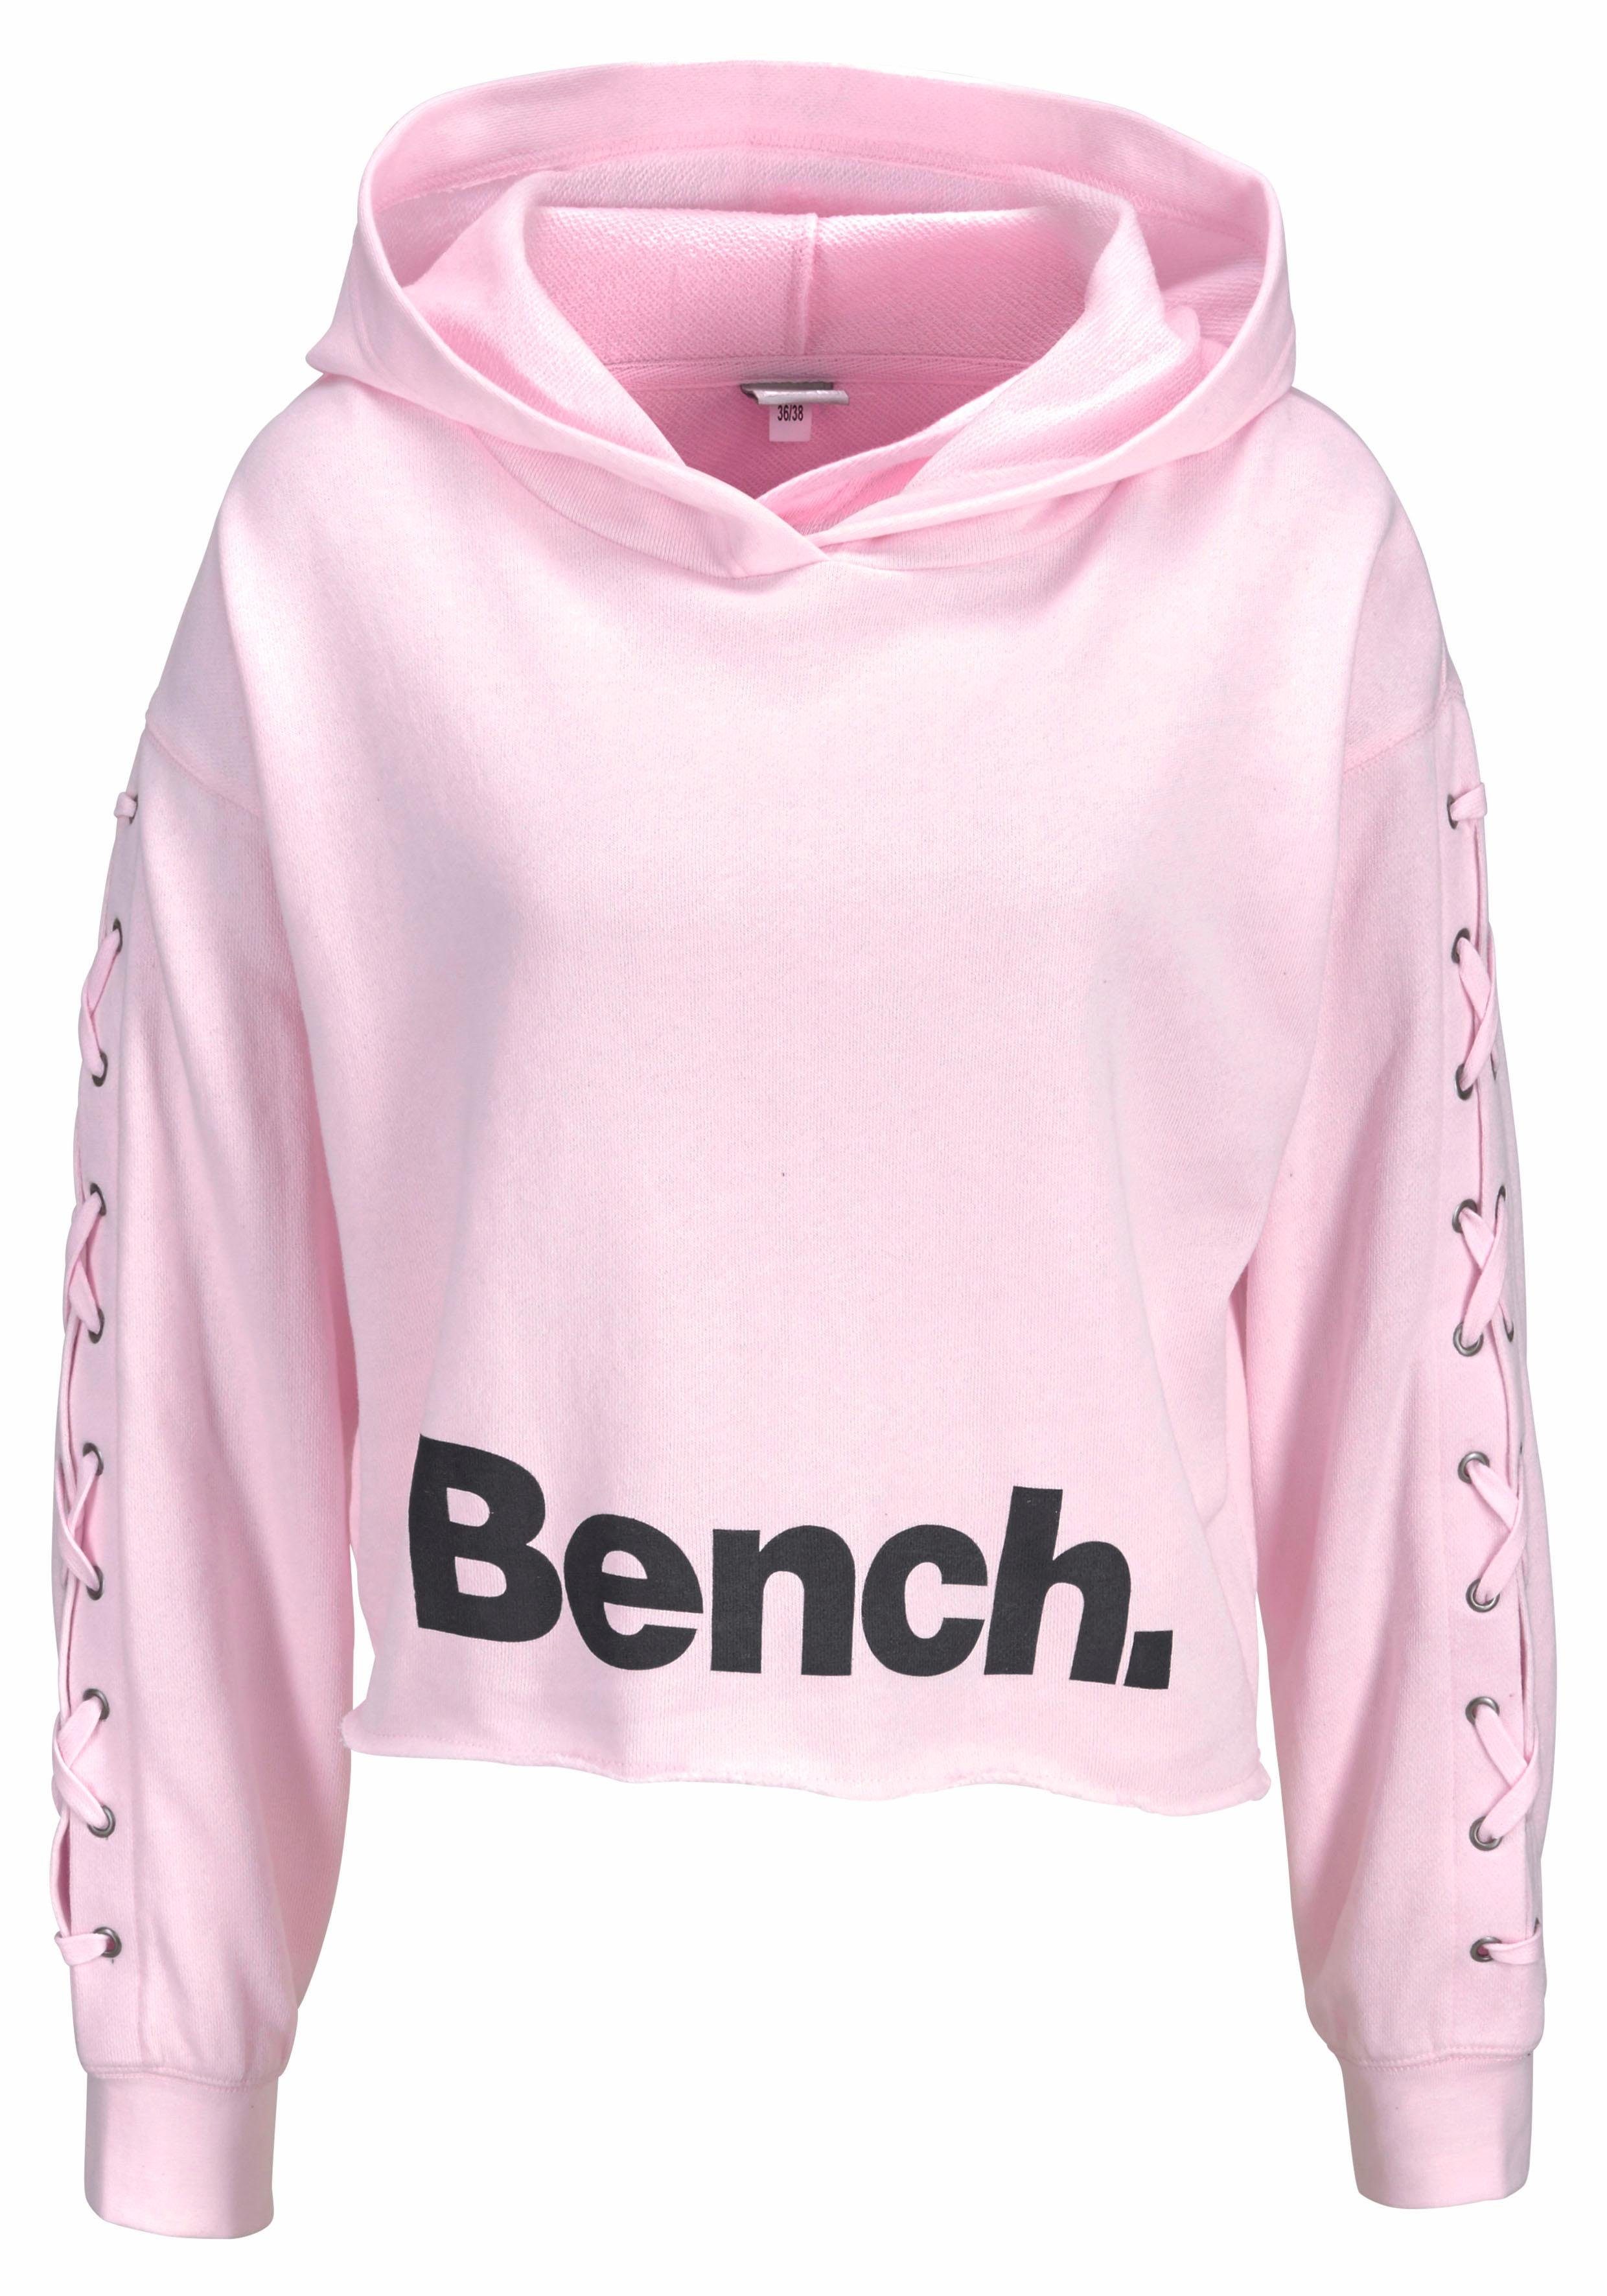 Bench. NU 15% KORTING: Bench. sweater